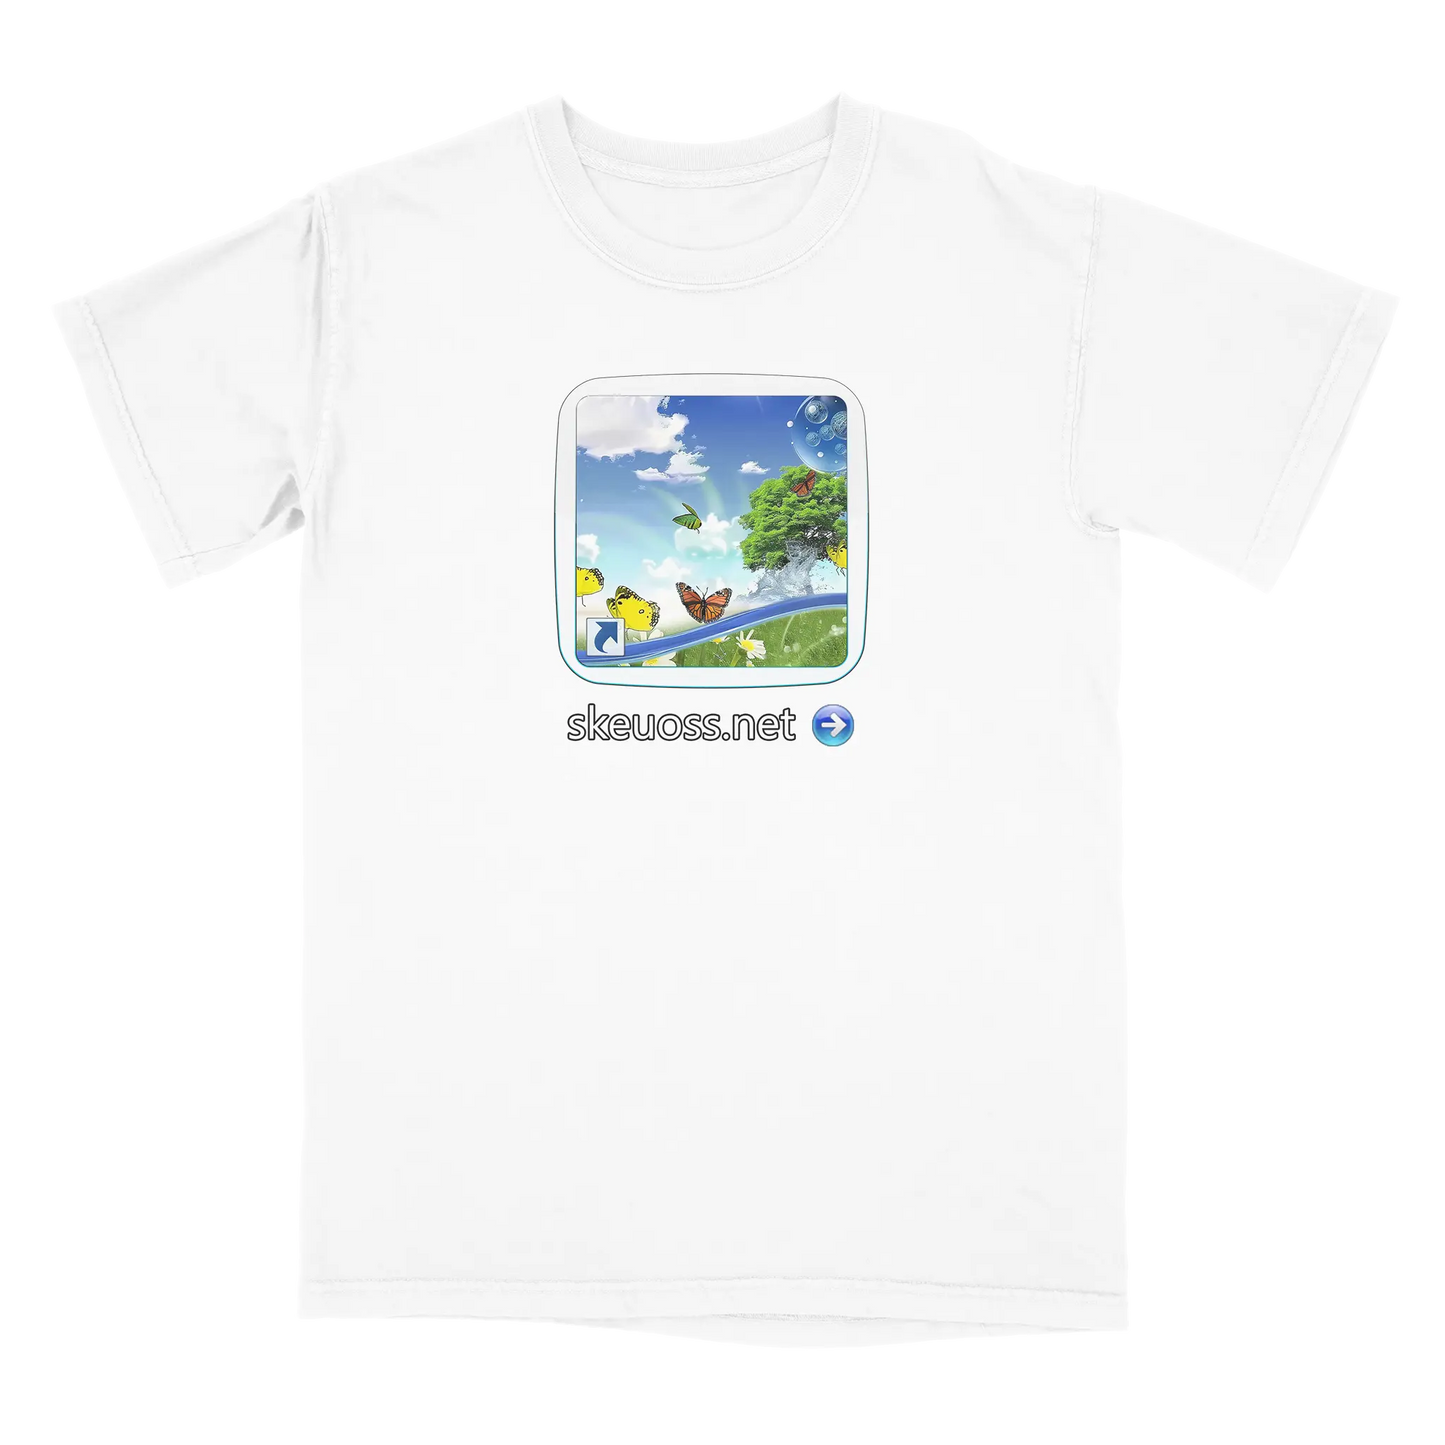 Frutiger Aero T-shirt - User Login Collection - User 389